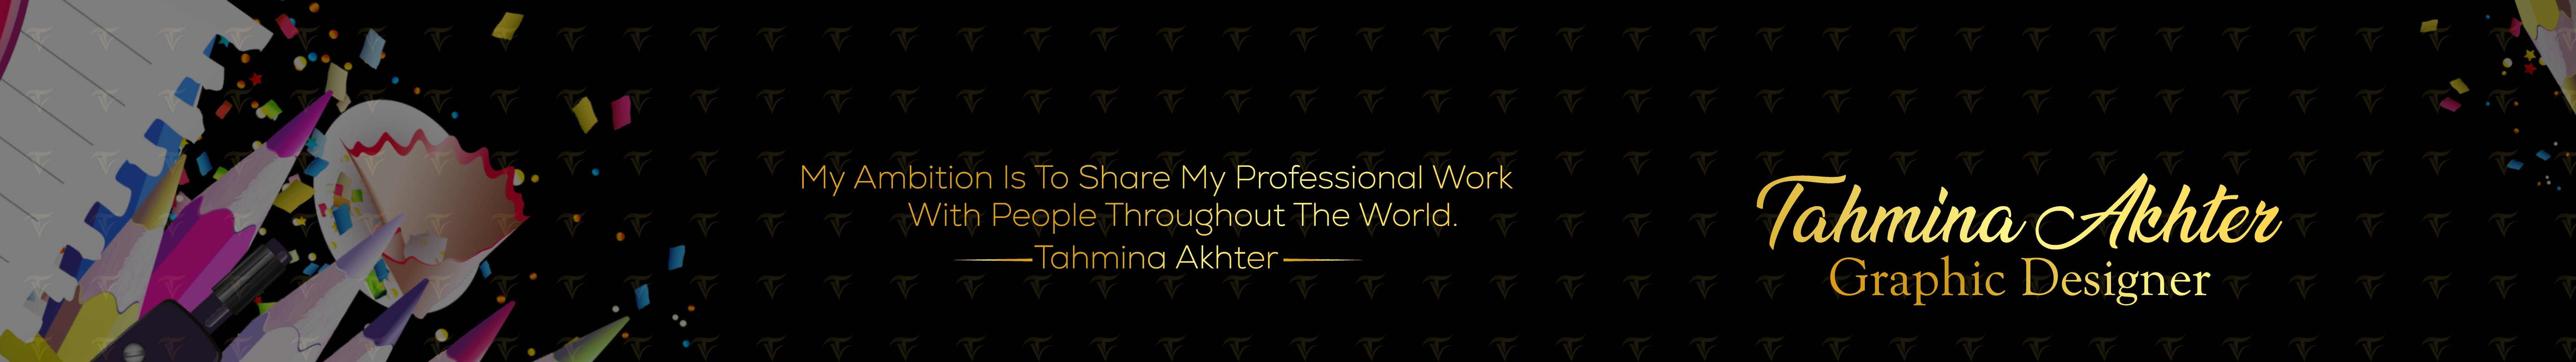 Profielbanner van Tahmina Akhter